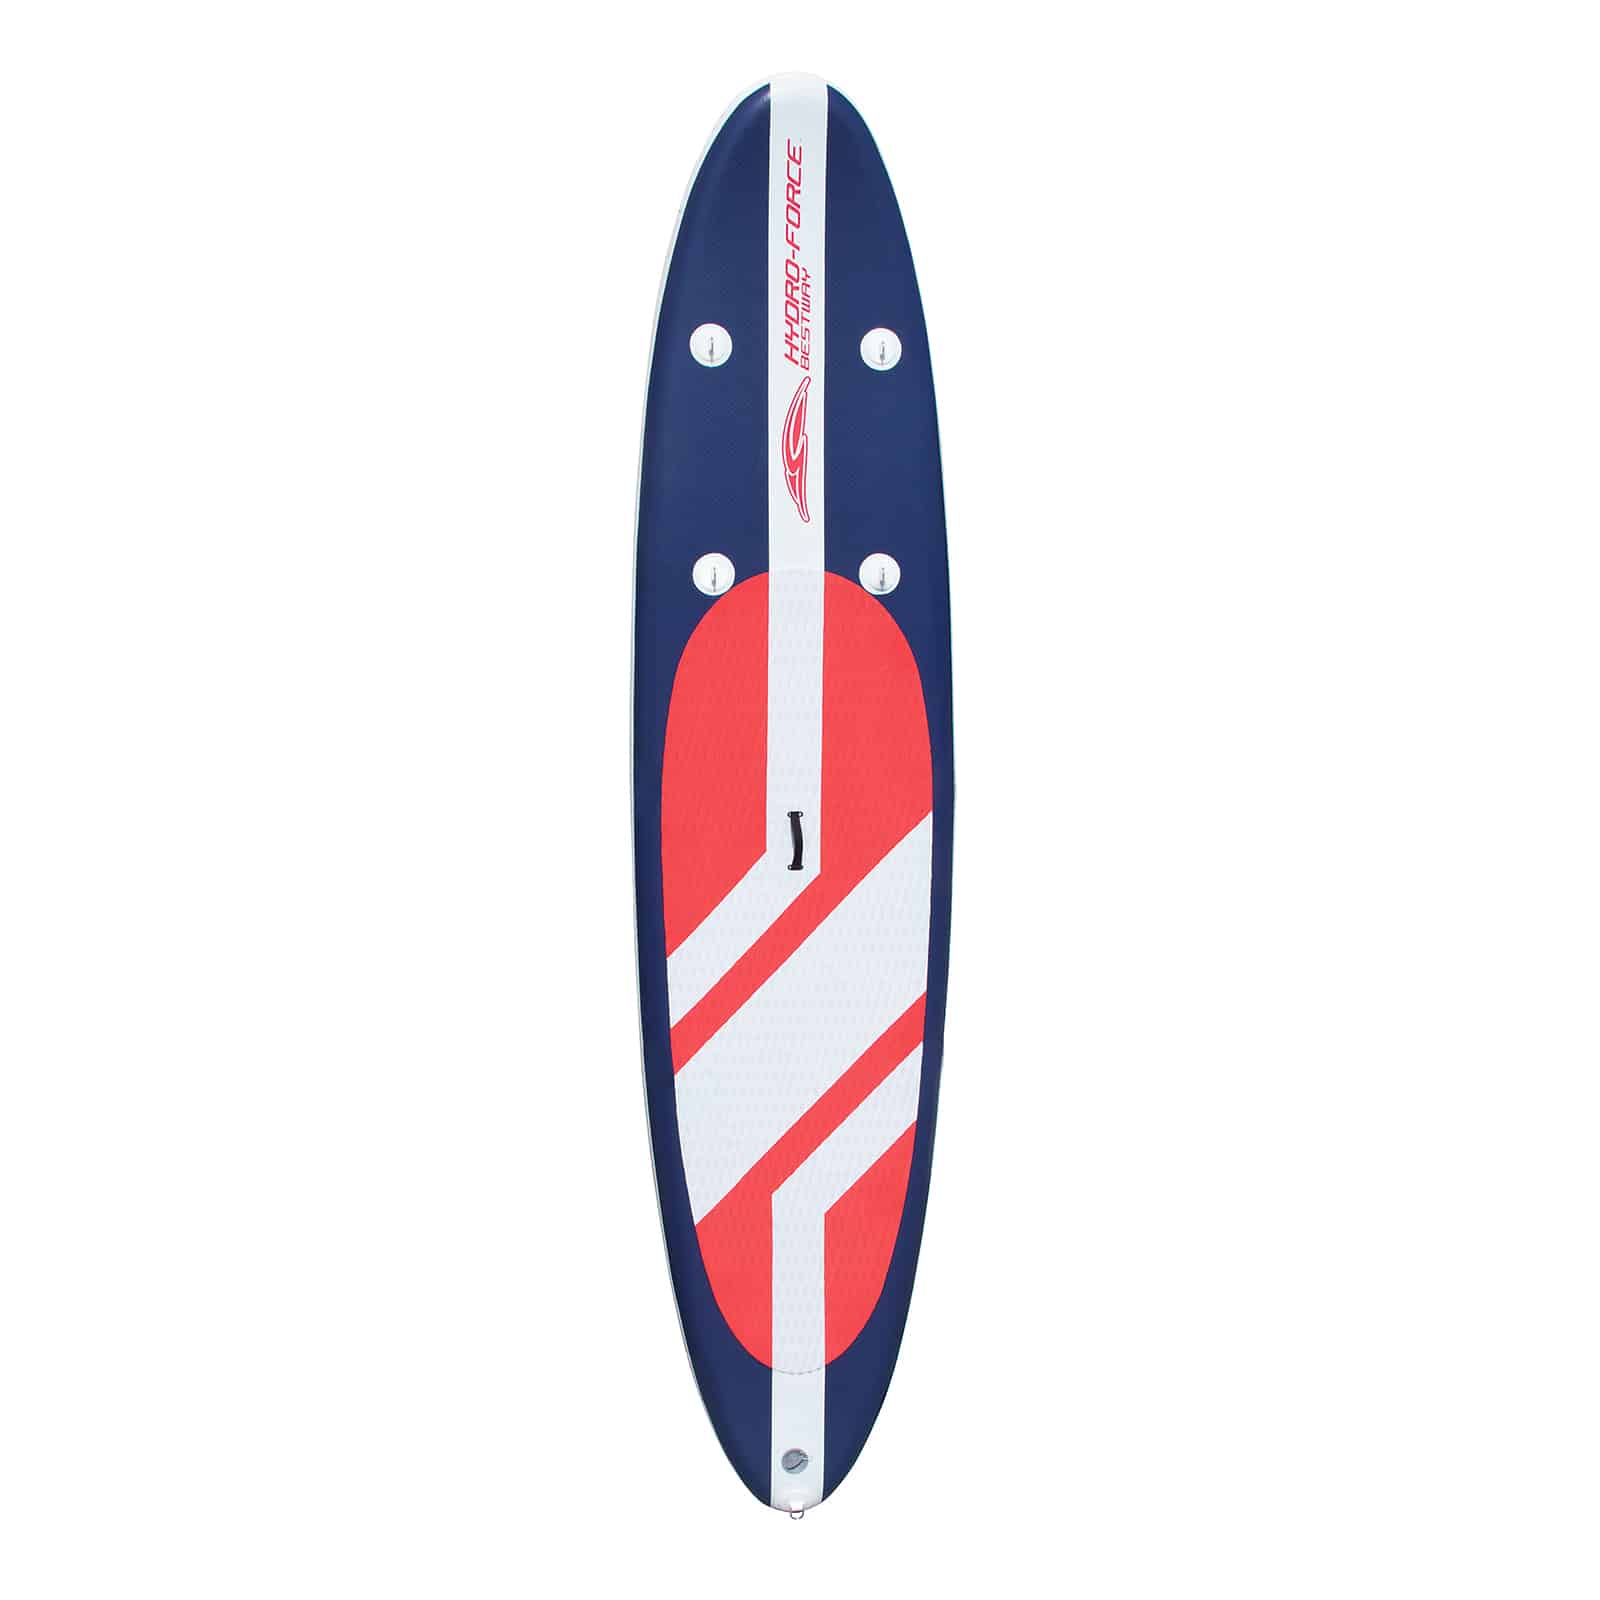 Tabla Paddle Surf Hinchable Bestway Hydro-force Long Tail 335x76x15 Cm Con Remo, Bomba Y Bolsa